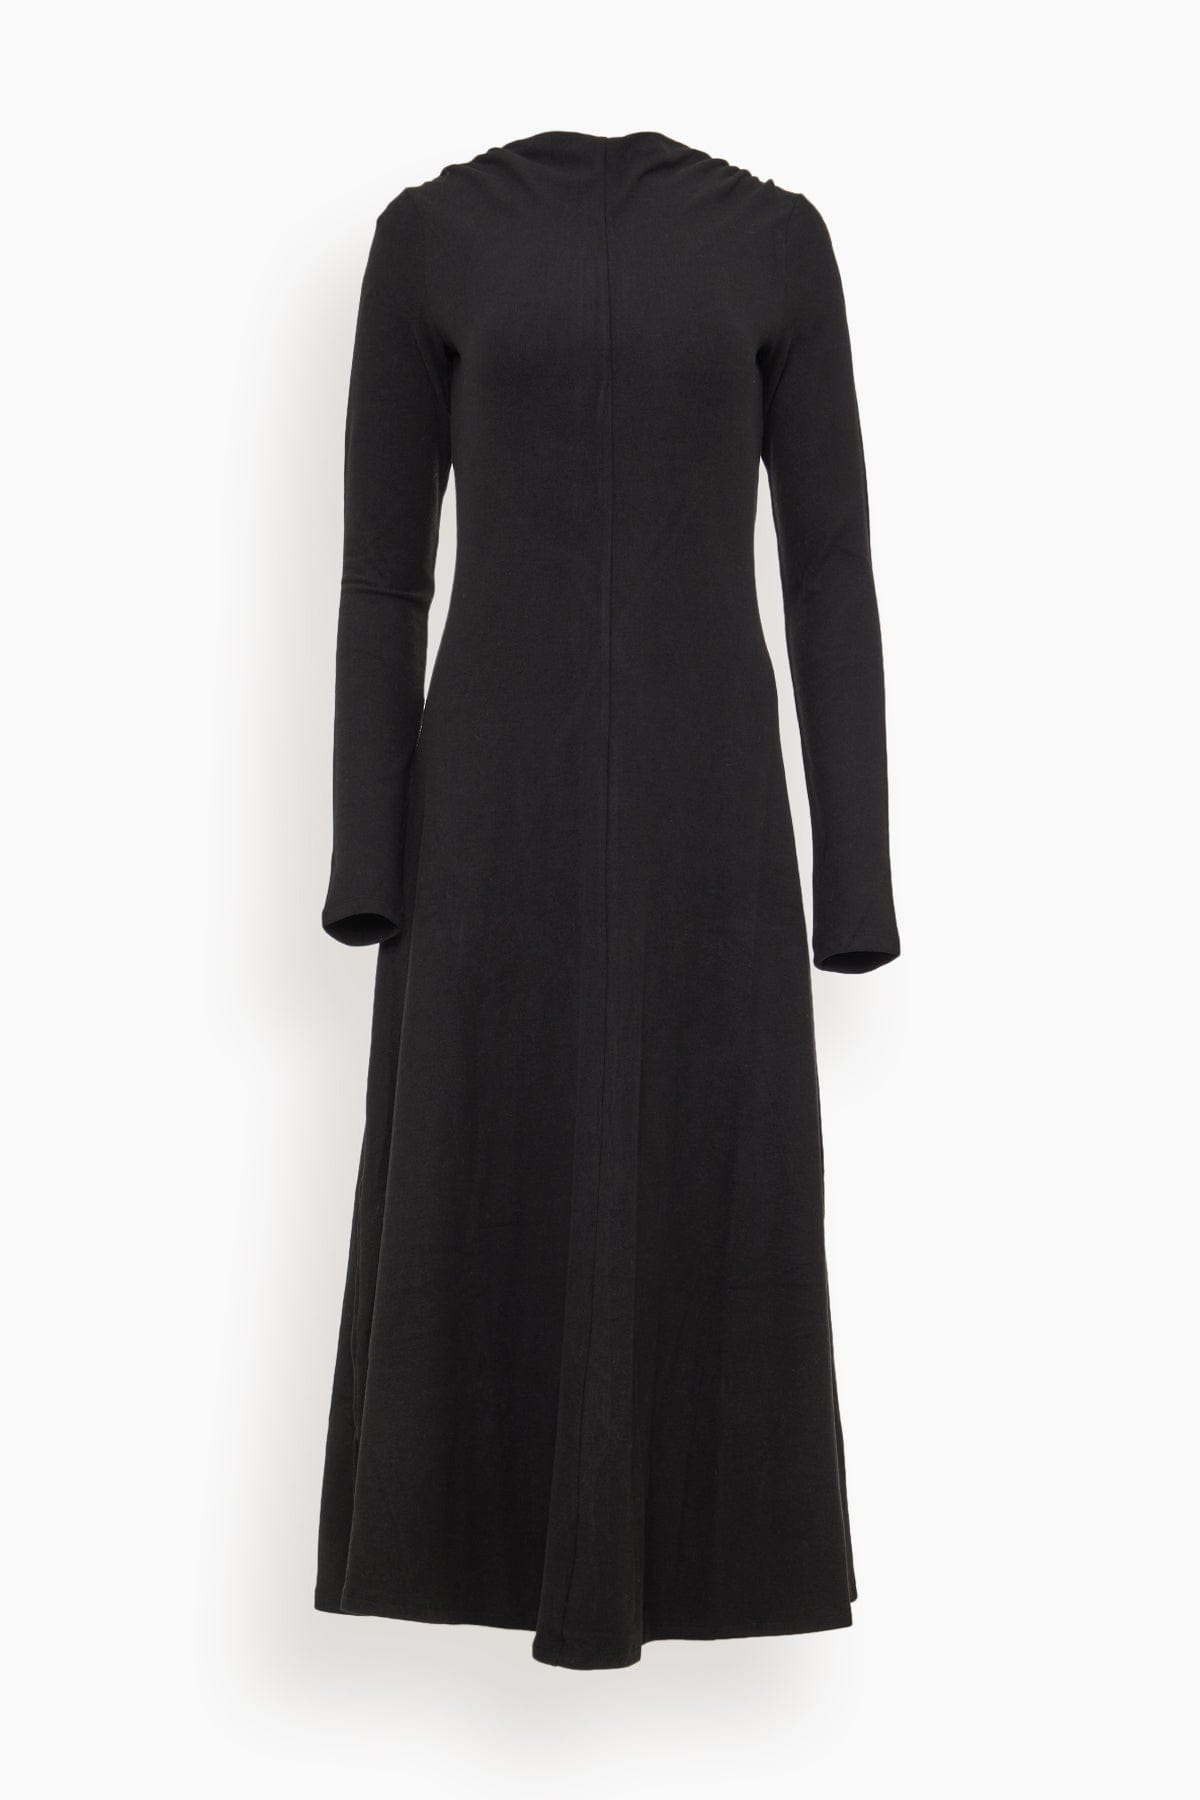 Proenza Schouler White Label Isabella Dress in Black - Black - Size: XS